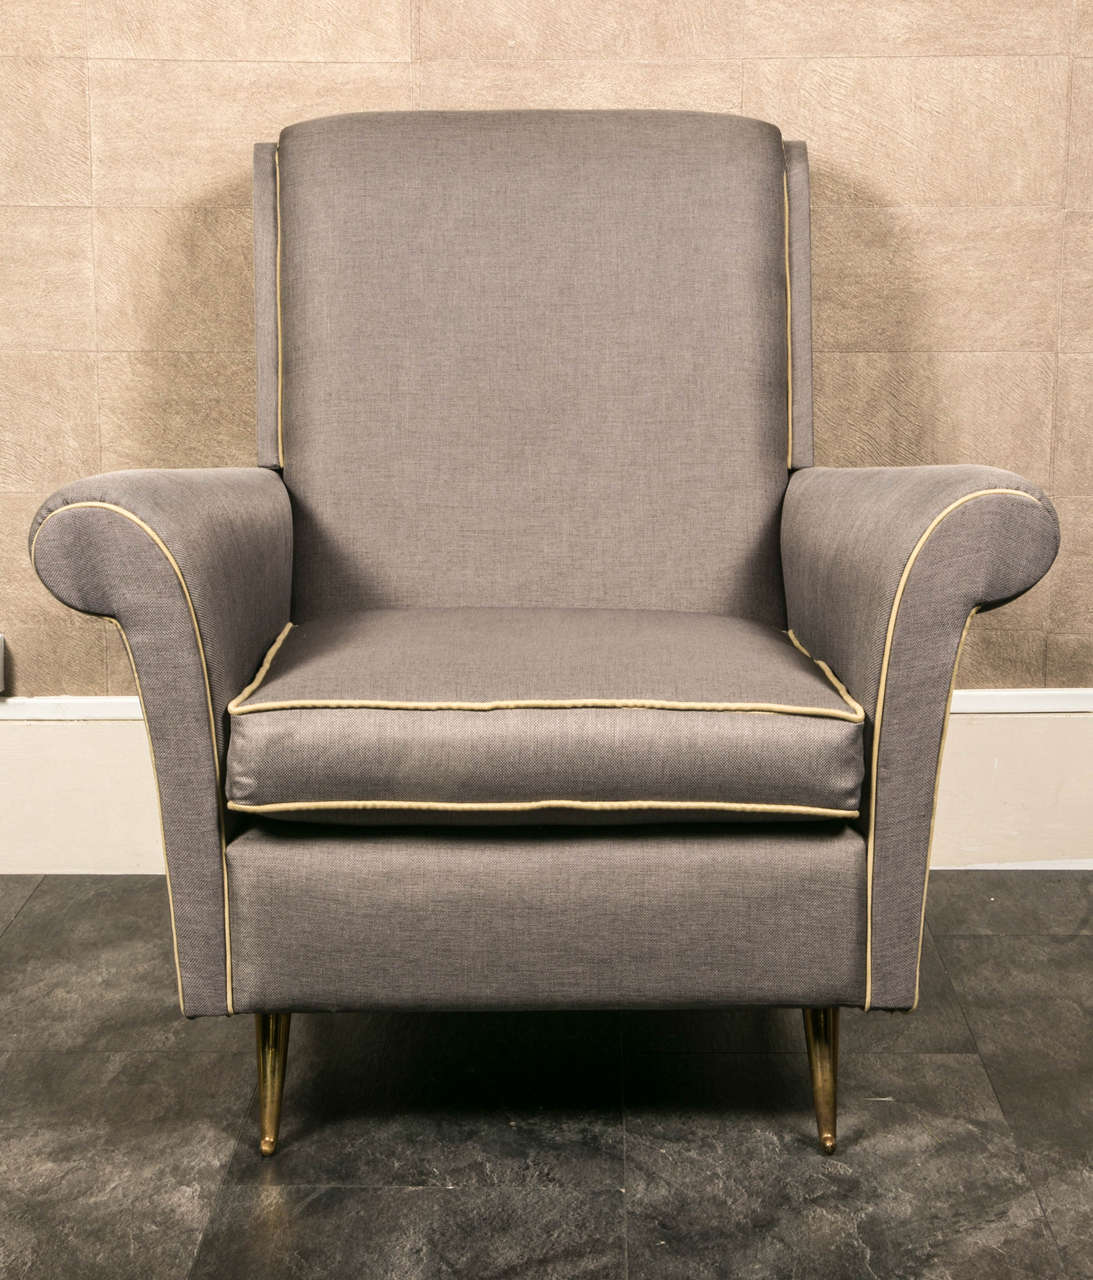 Elegant pair of 1950 Italian armchairs.
Brass legs, newly upholstered.